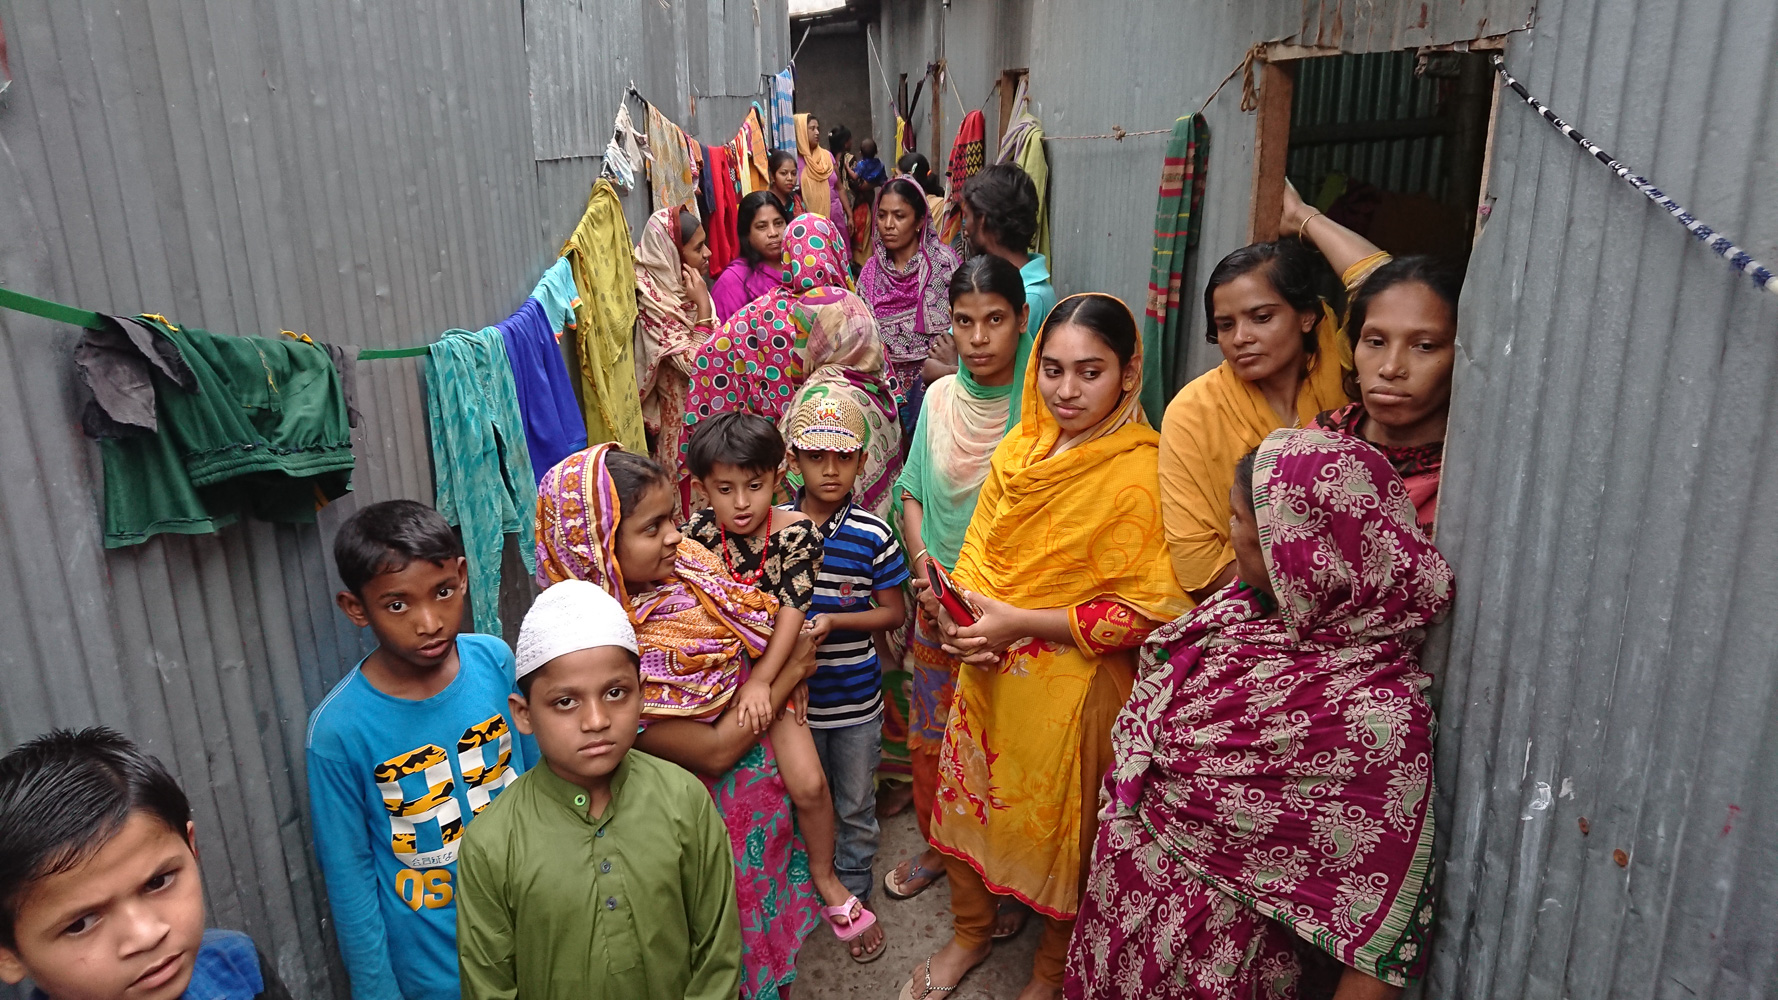 Workers dormitories in Dhaka